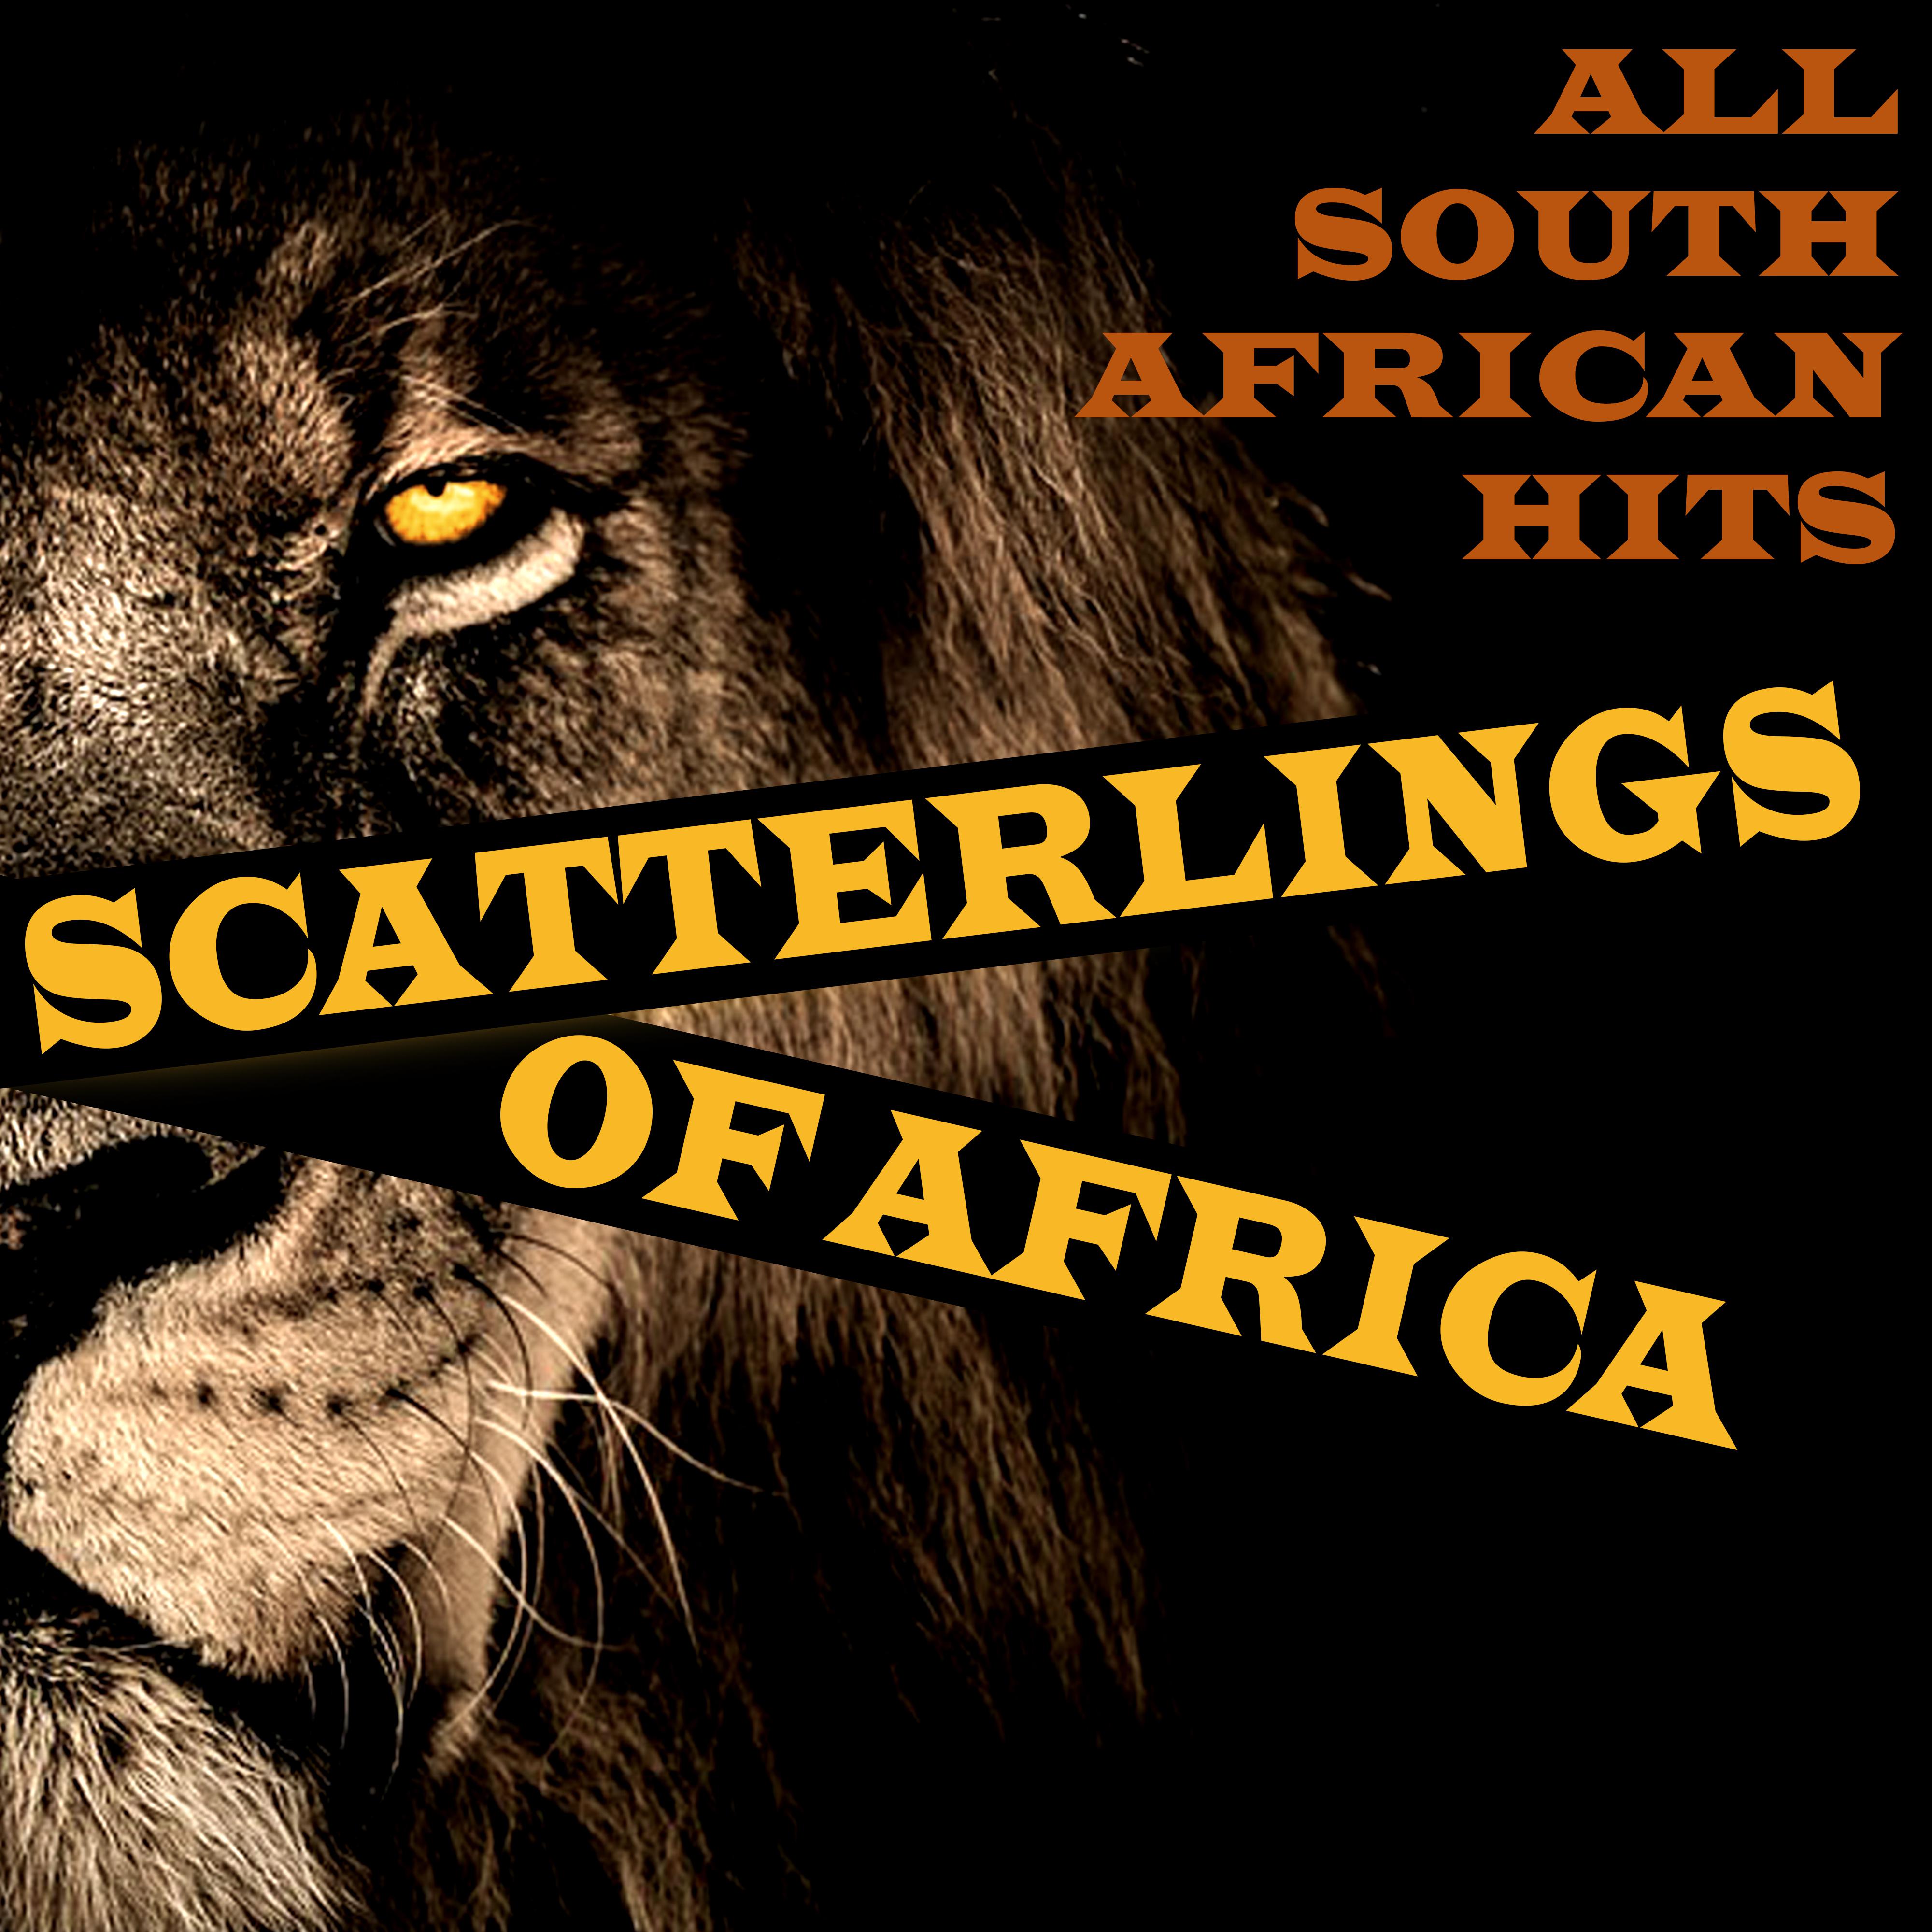 Scartterlings of Africa